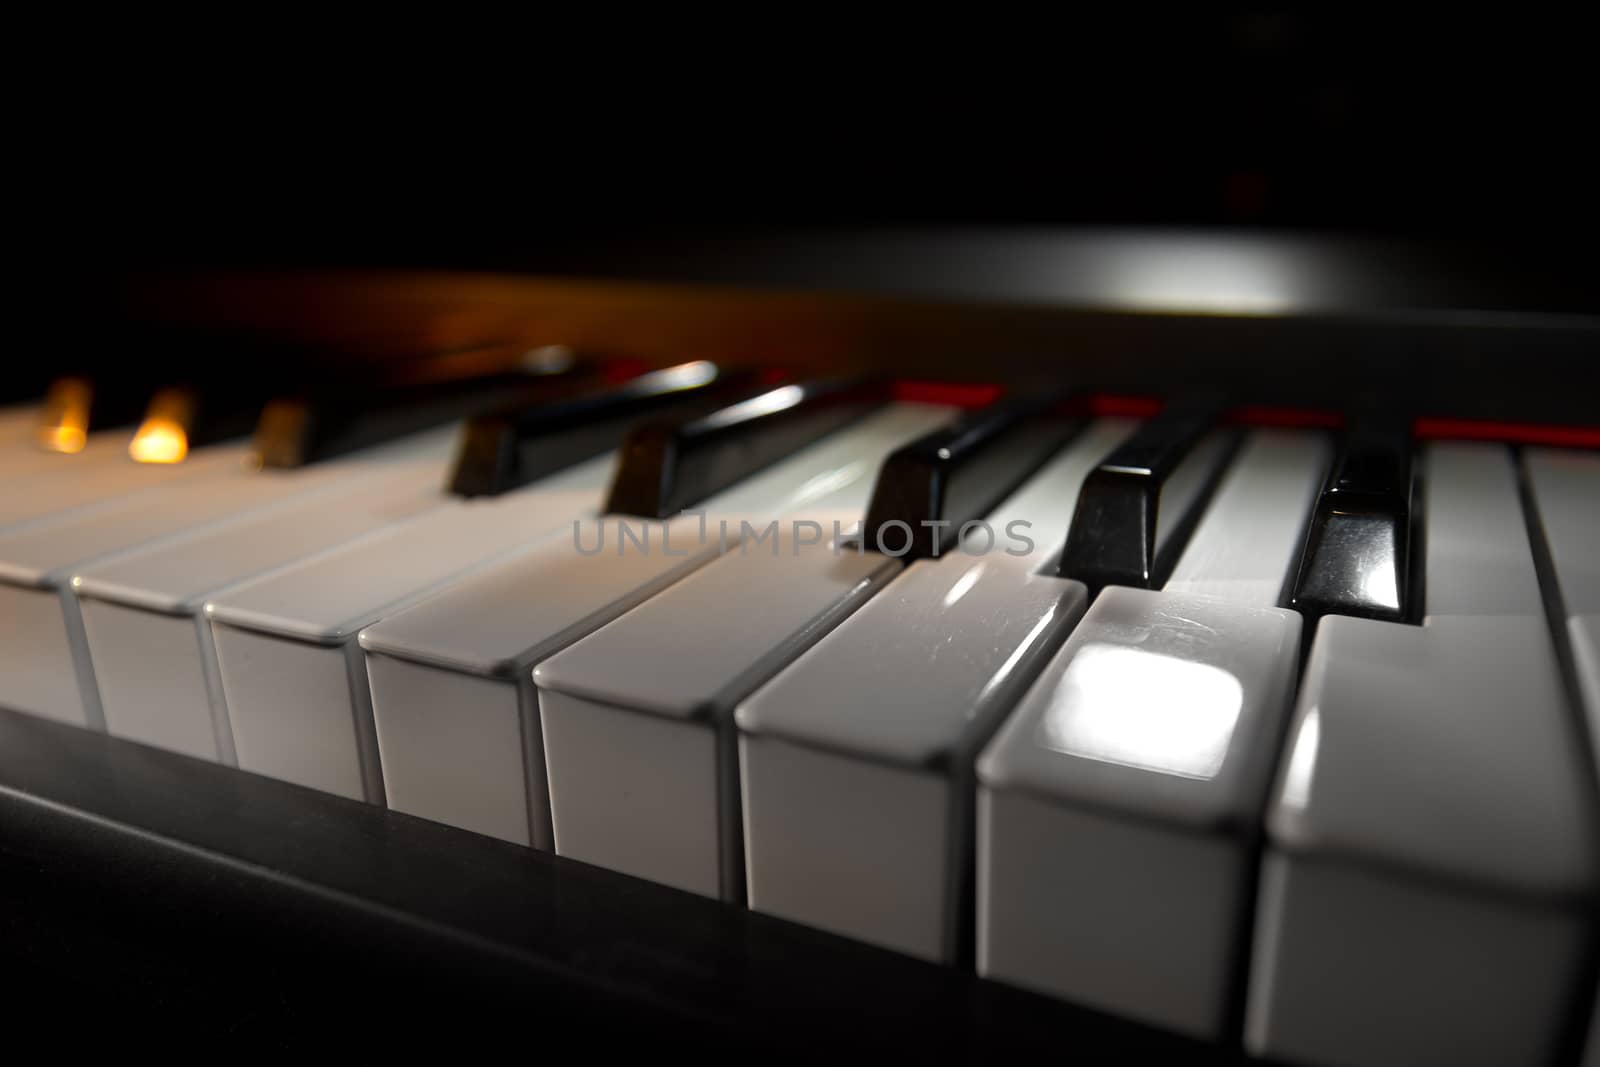 Piano keyboard by nikolaev